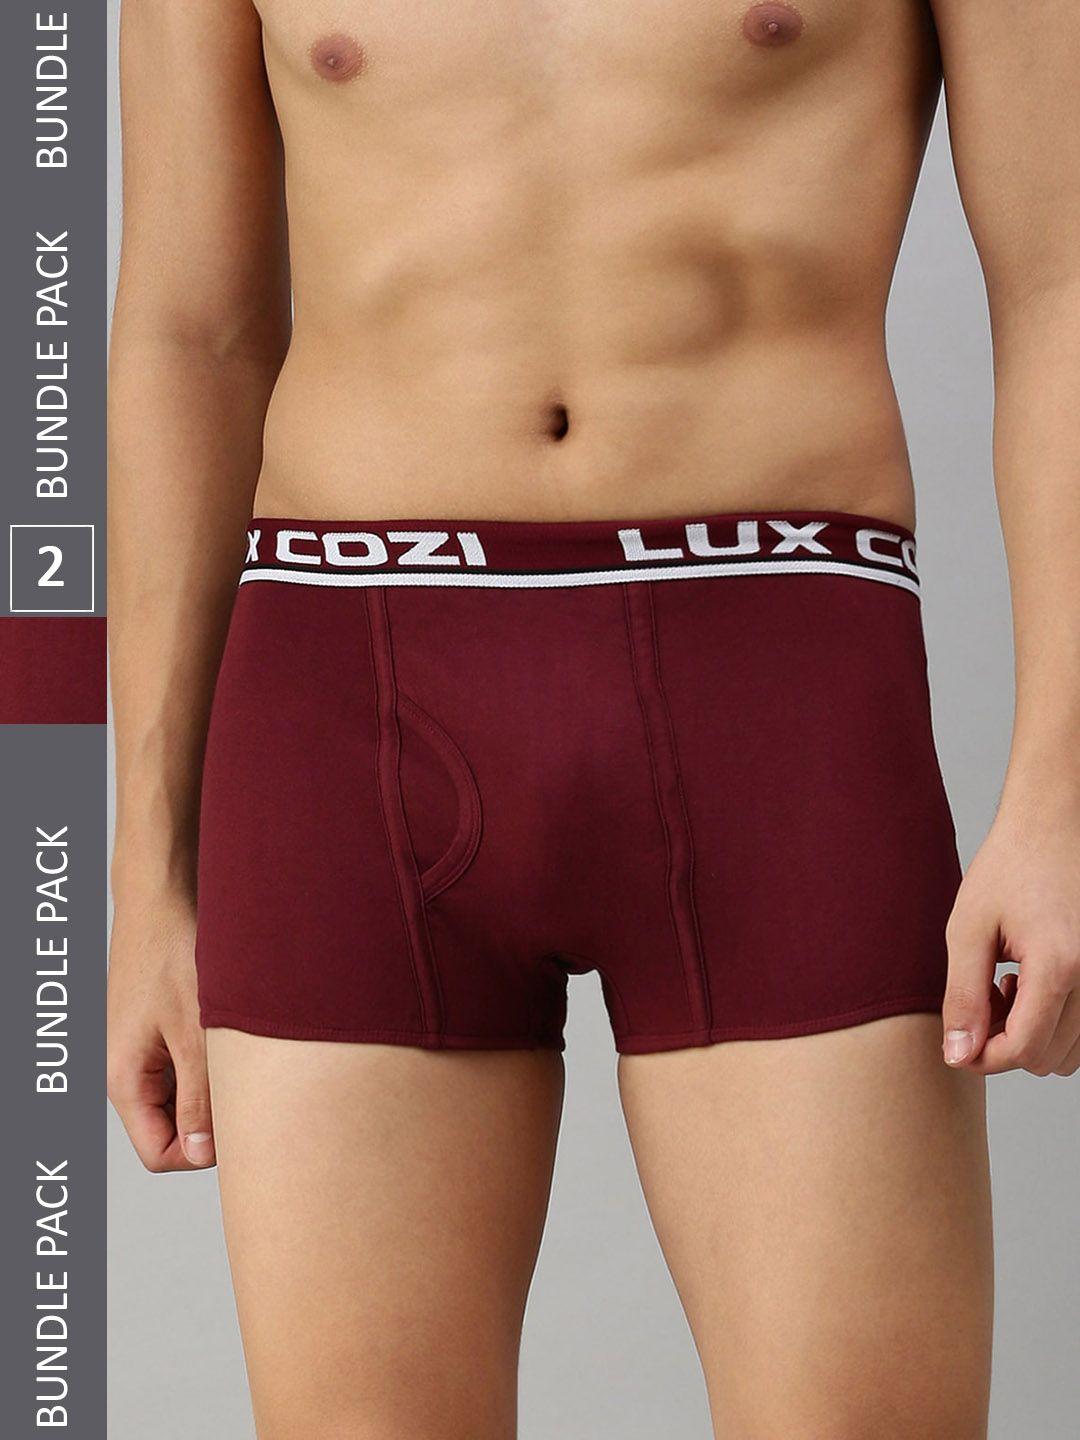 lux cozi men pack of 2 brand logo printed pure cotton trunks cozi_bigshot_slp_mrn_2pc